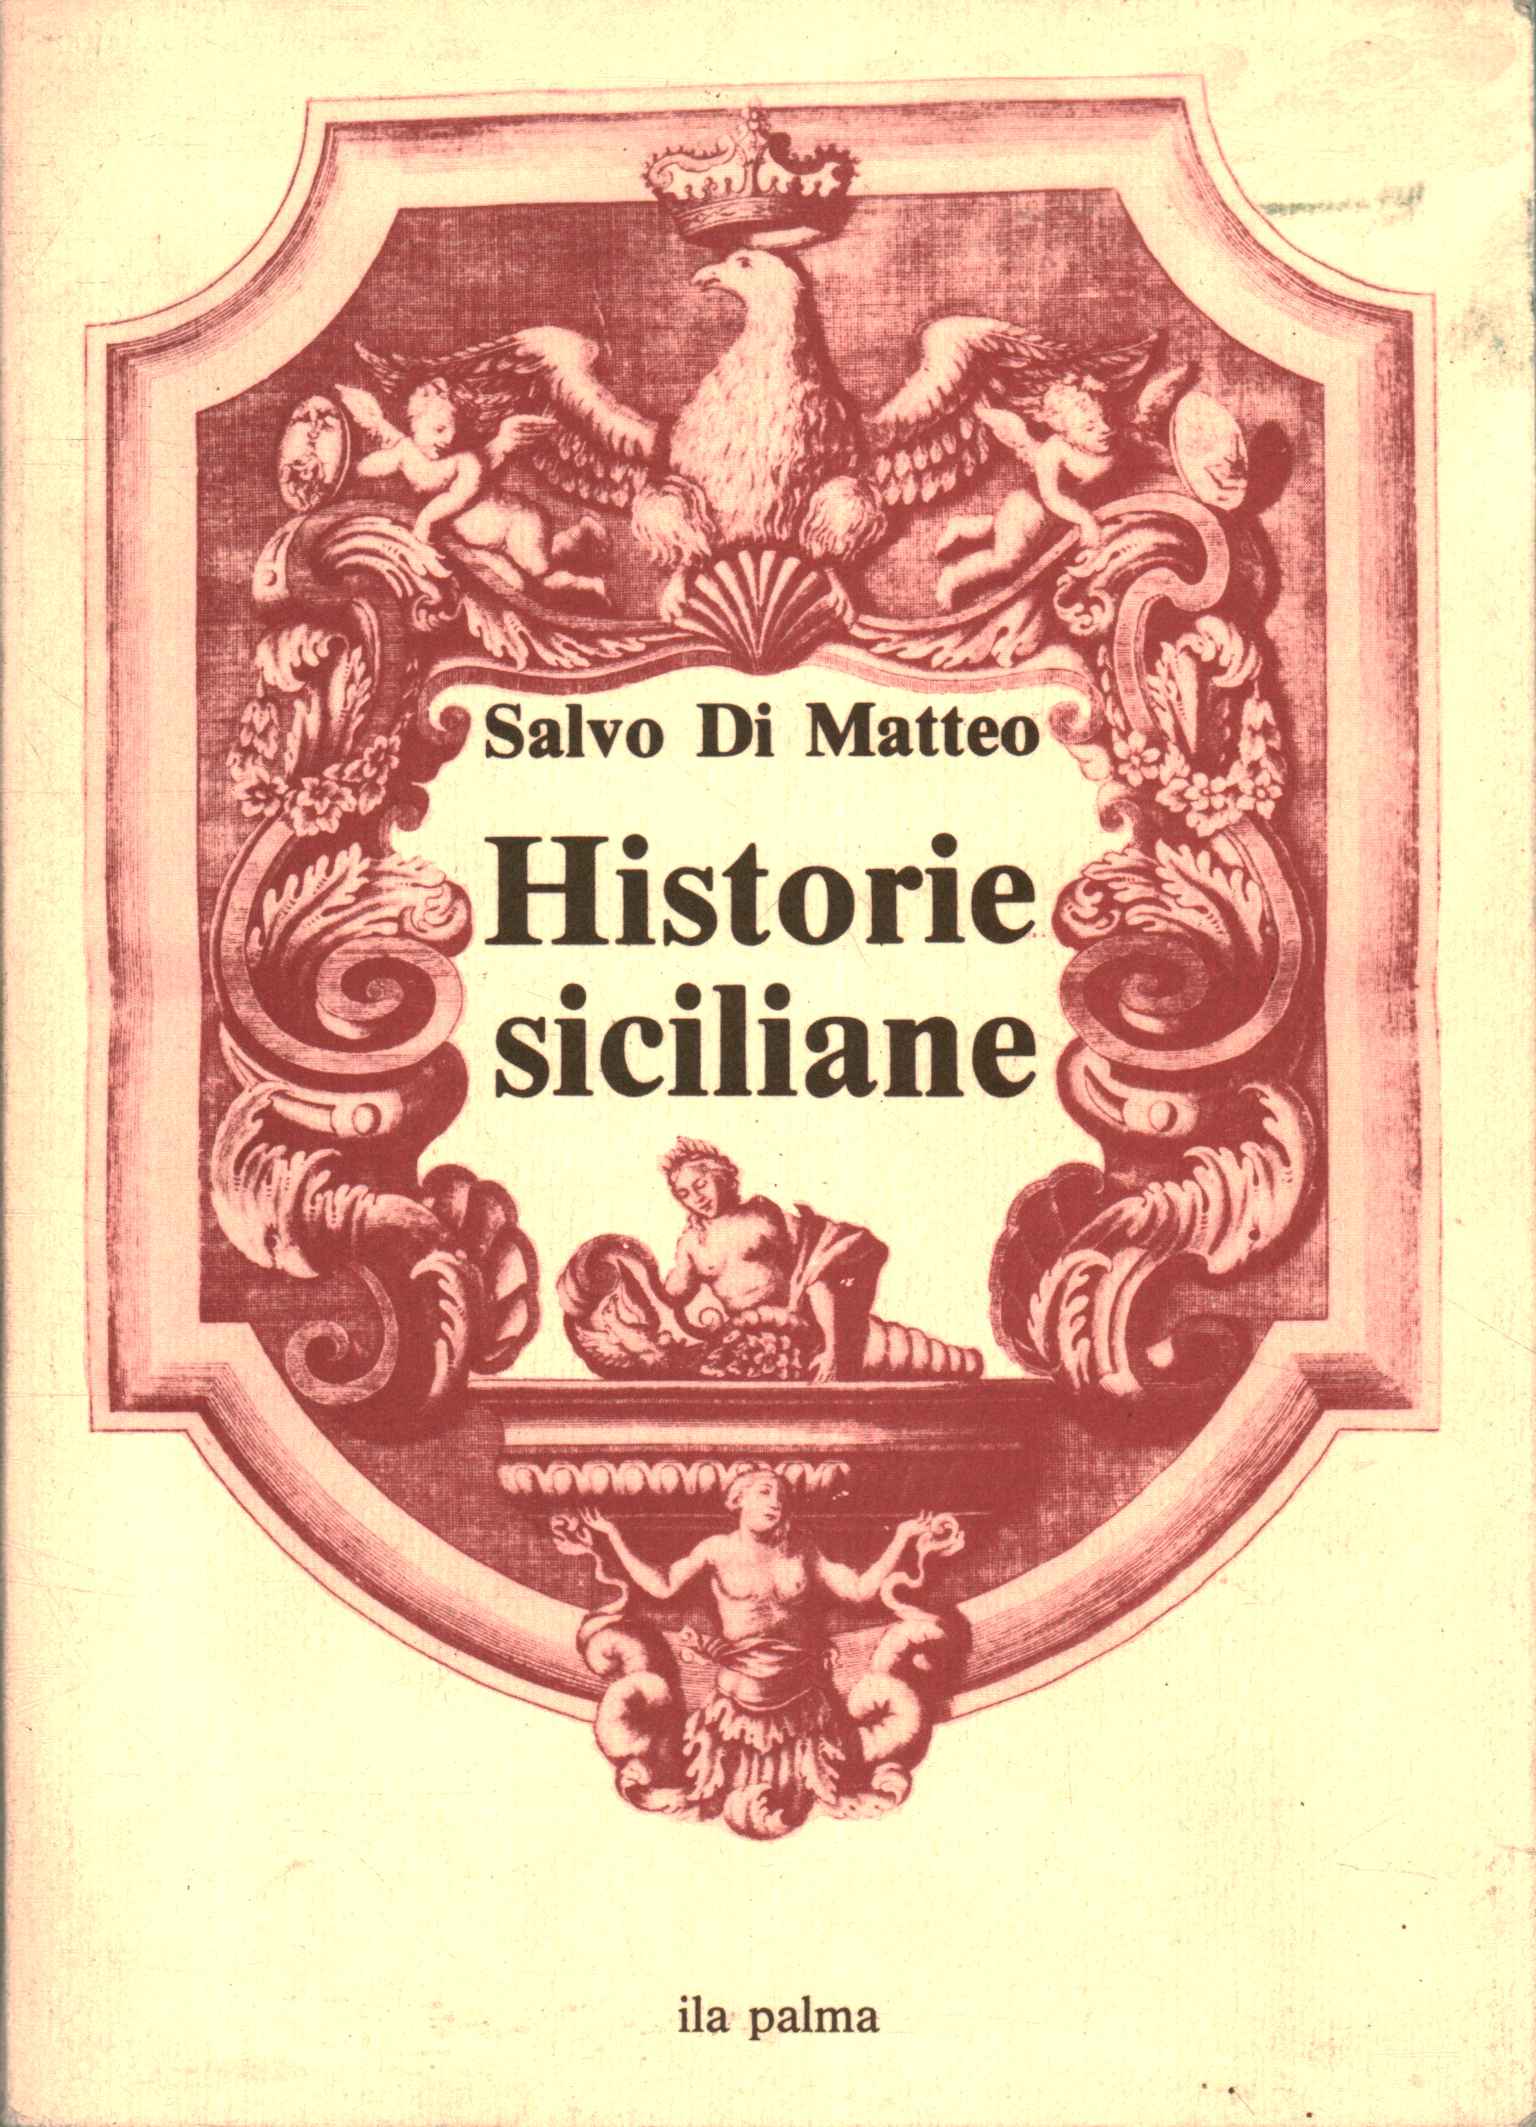 Sicilian Histories